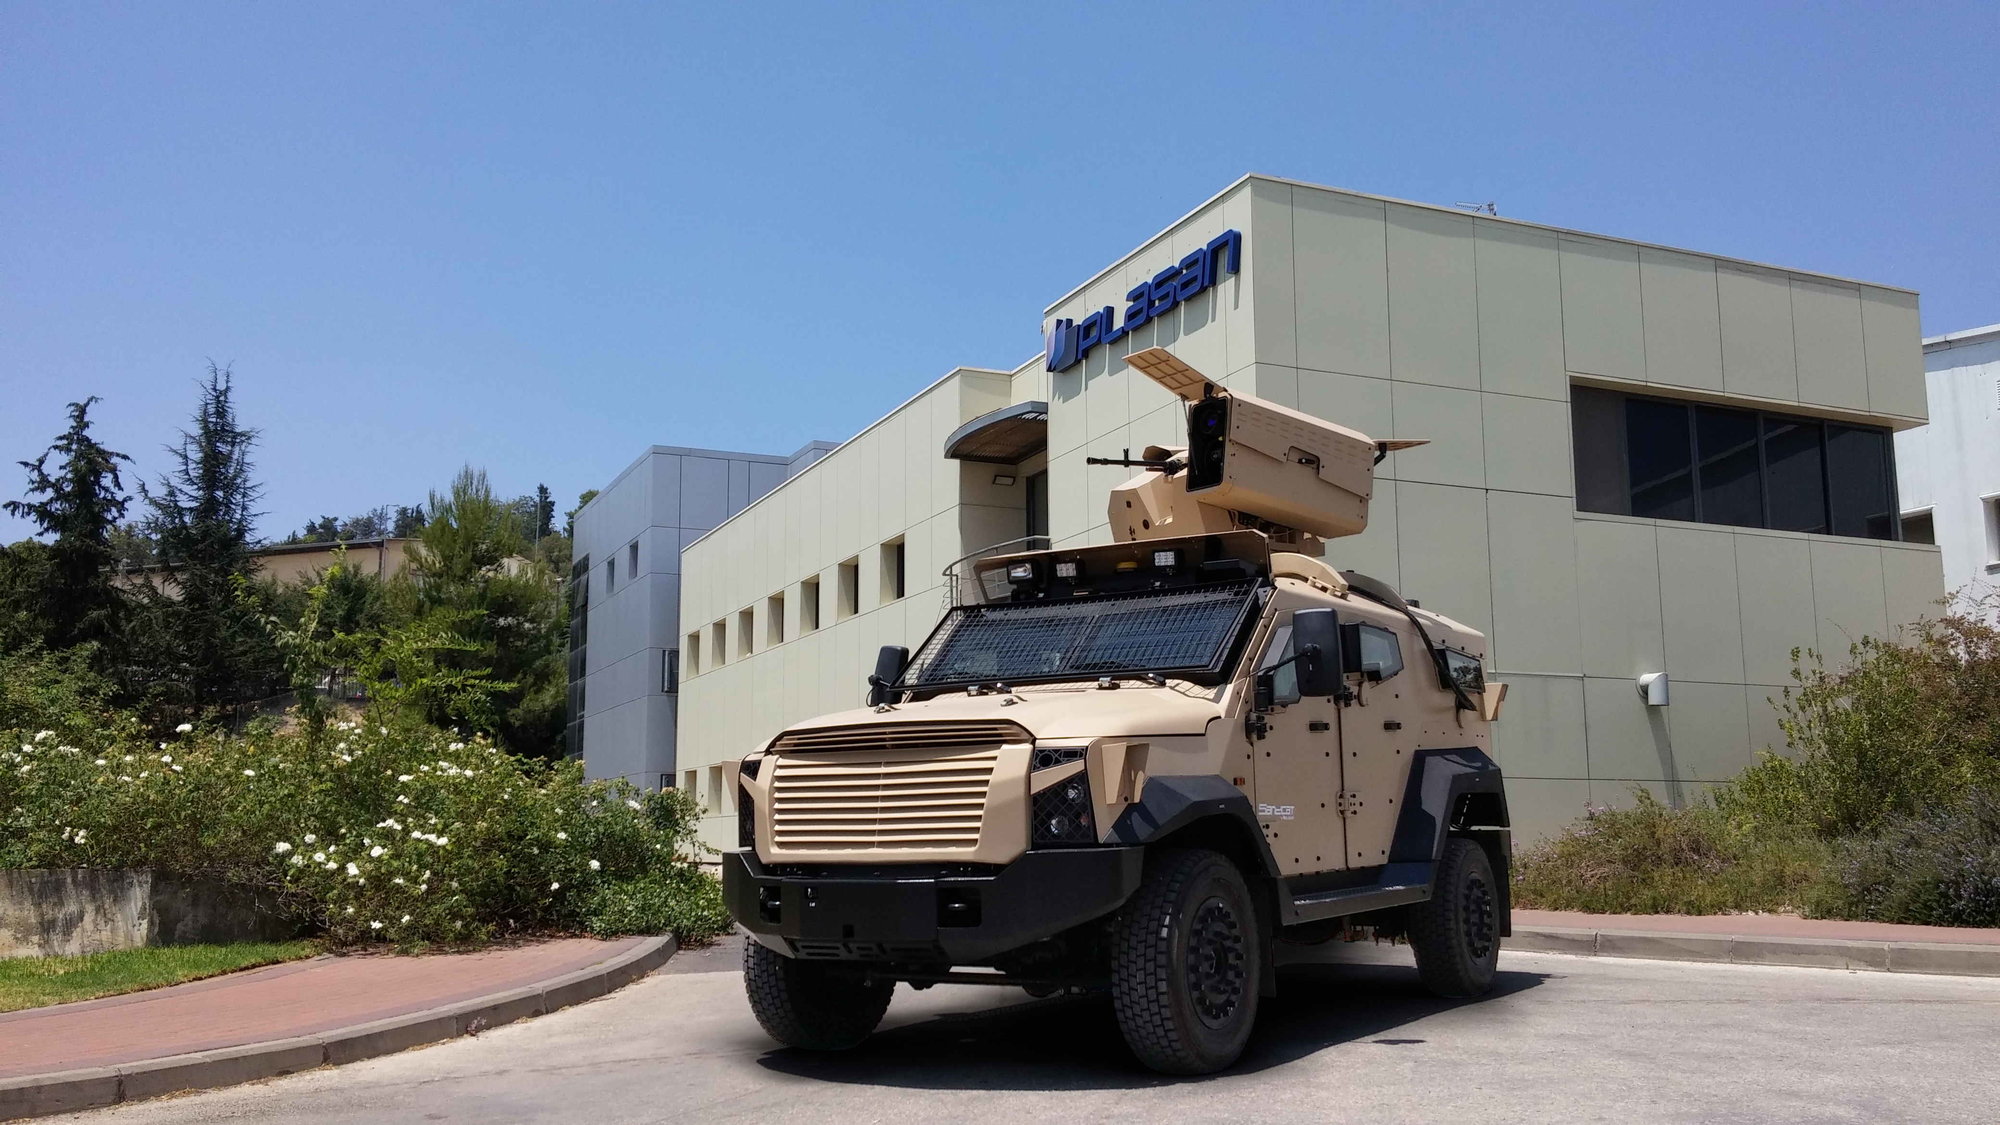 SandCat-4x4-light-armored-vehicle-002.jpg